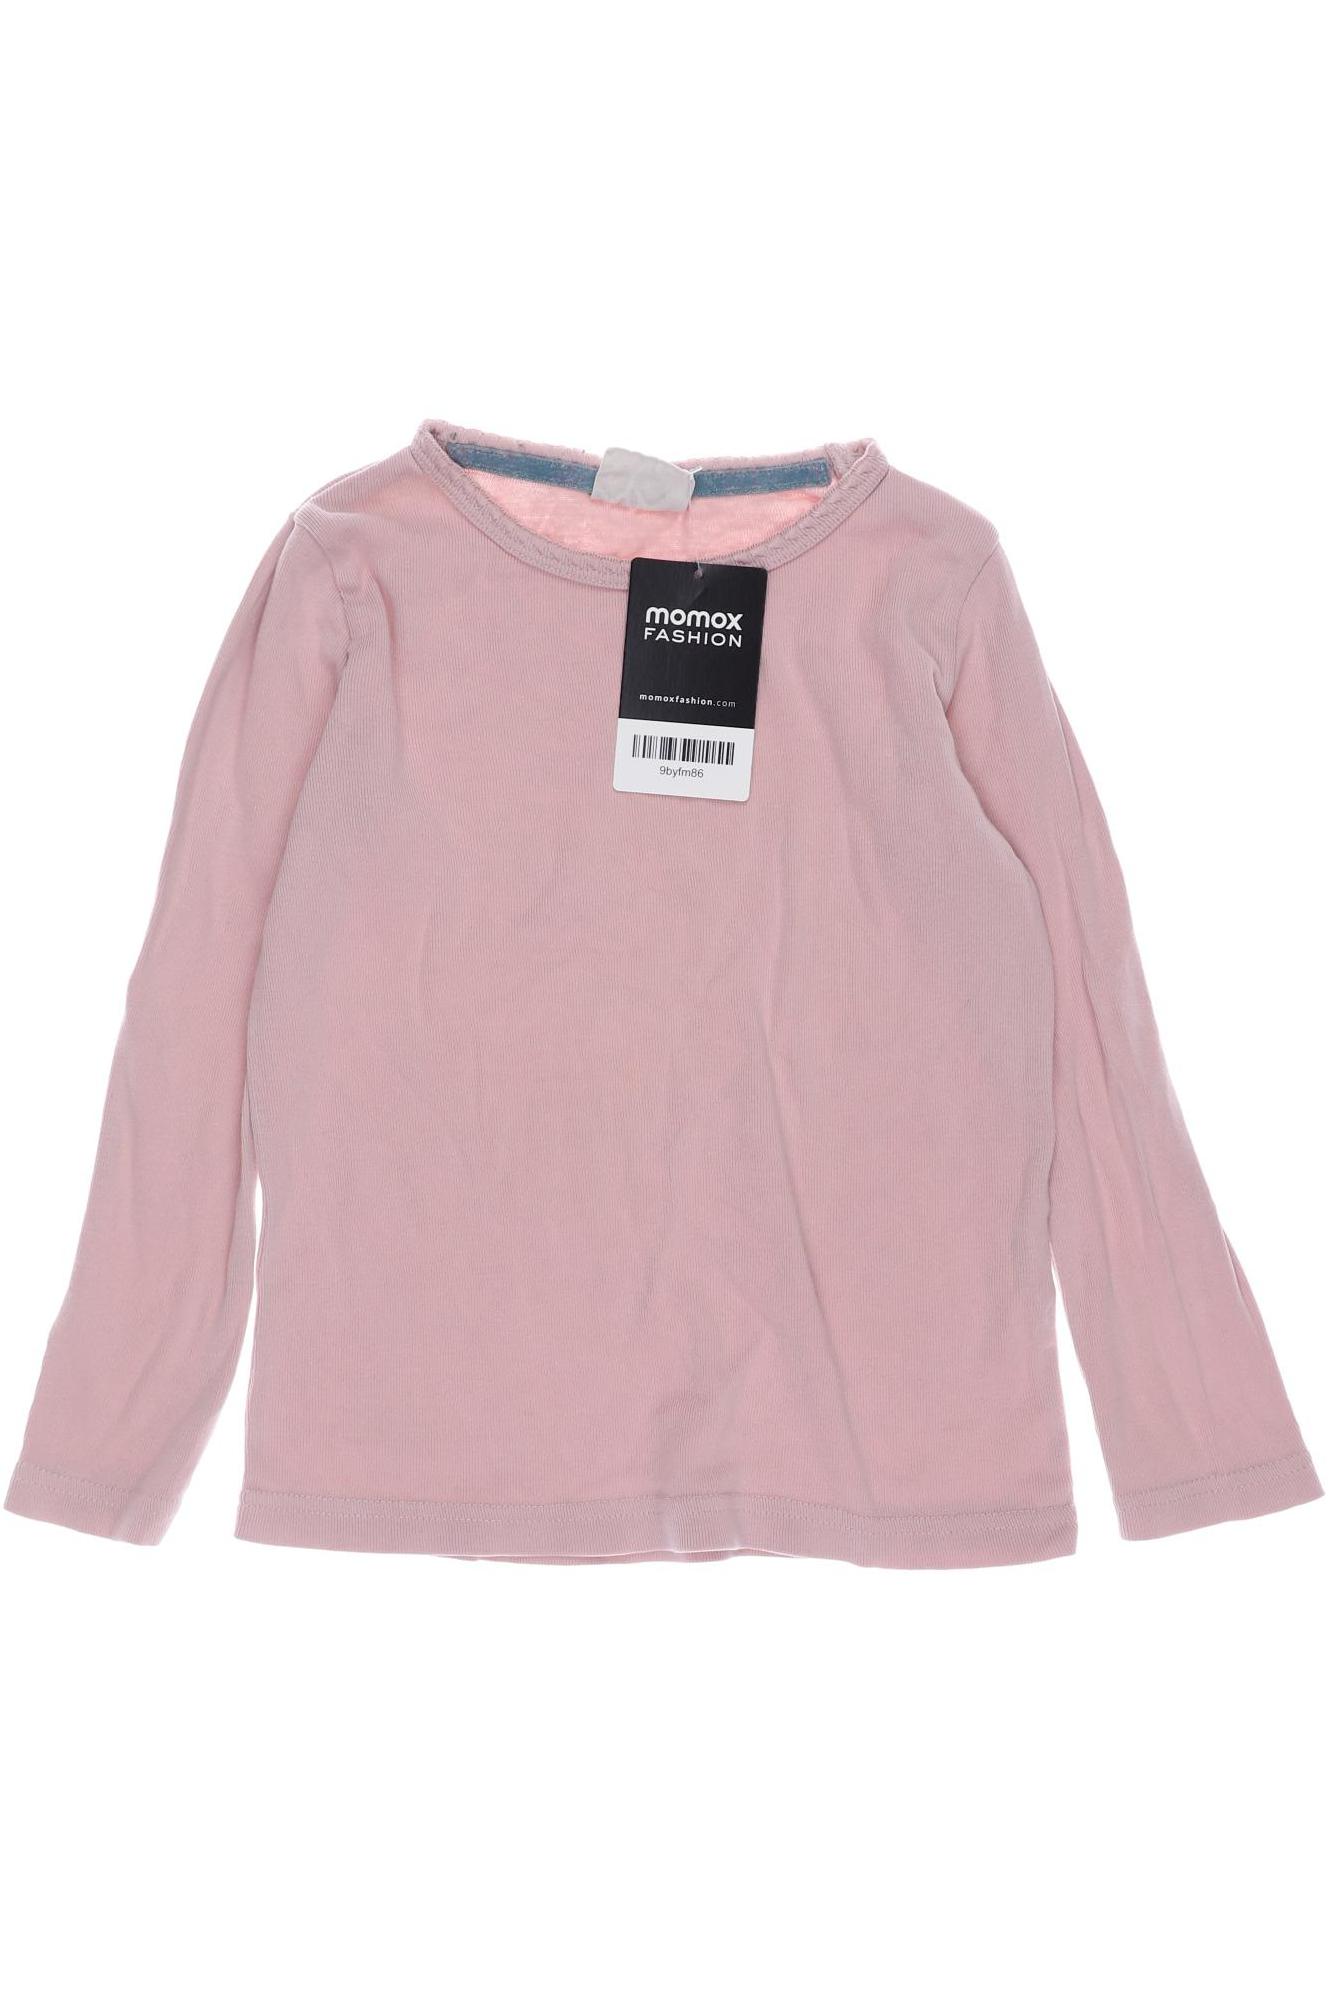 Mini Boden Damen Langarmshirt, pink, Gr. 104 von Mini Boden